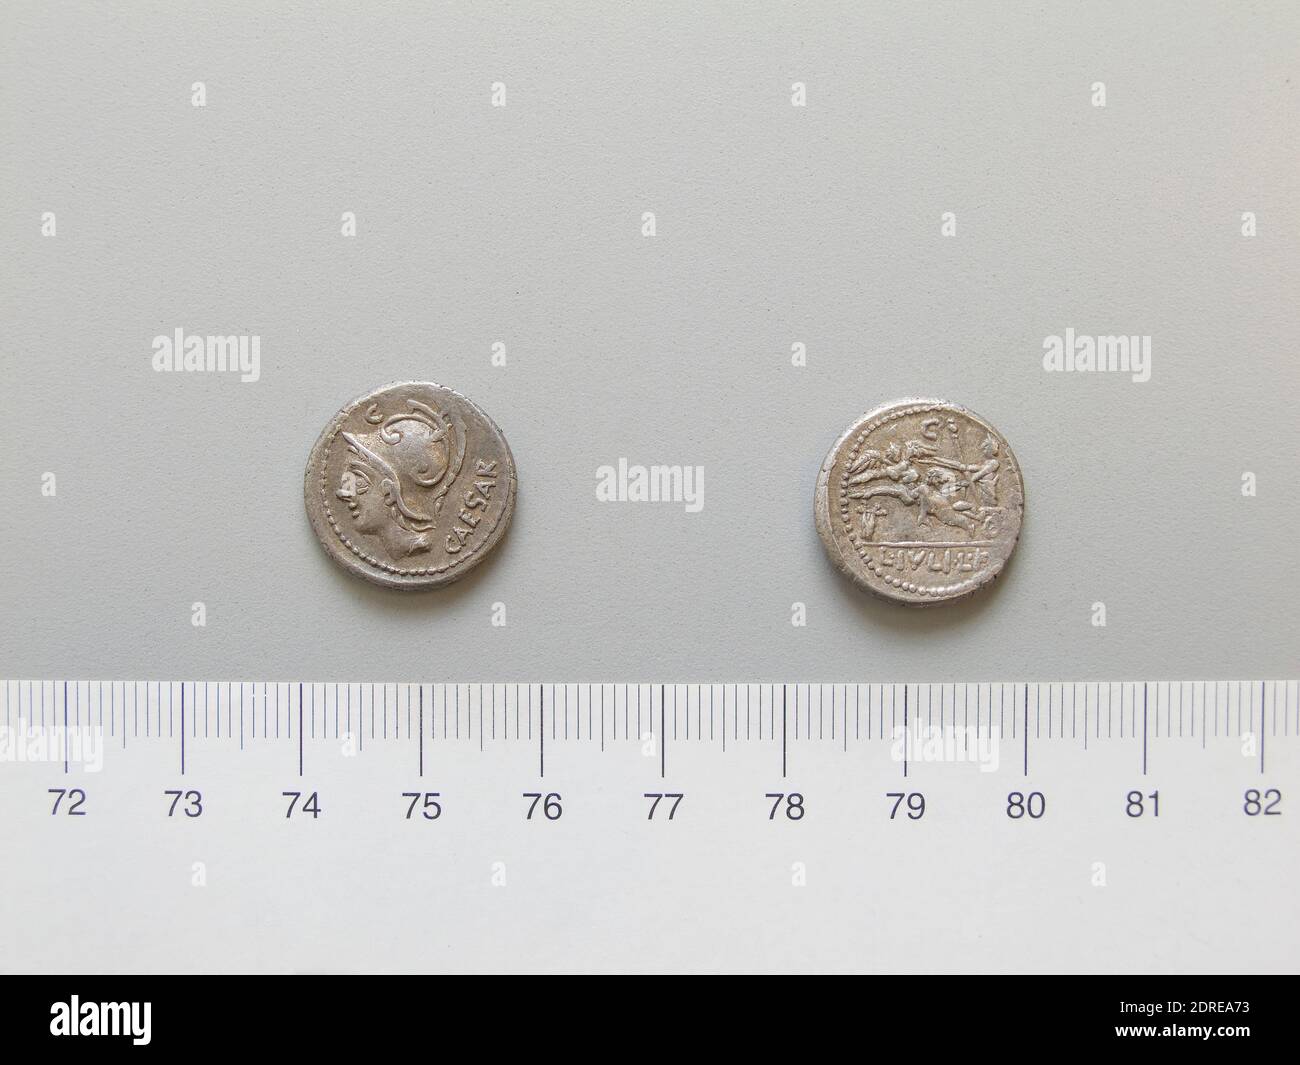 Mint: Rome, Magistrate: L. Julius L.f. Caesar, Denarius from Rome, 103 B.C., Silver, 3.93 g, 8:00, 18 mm, Made in Rome, Italy, Roman, 2nd century B.C., Numismatics Stock Photo